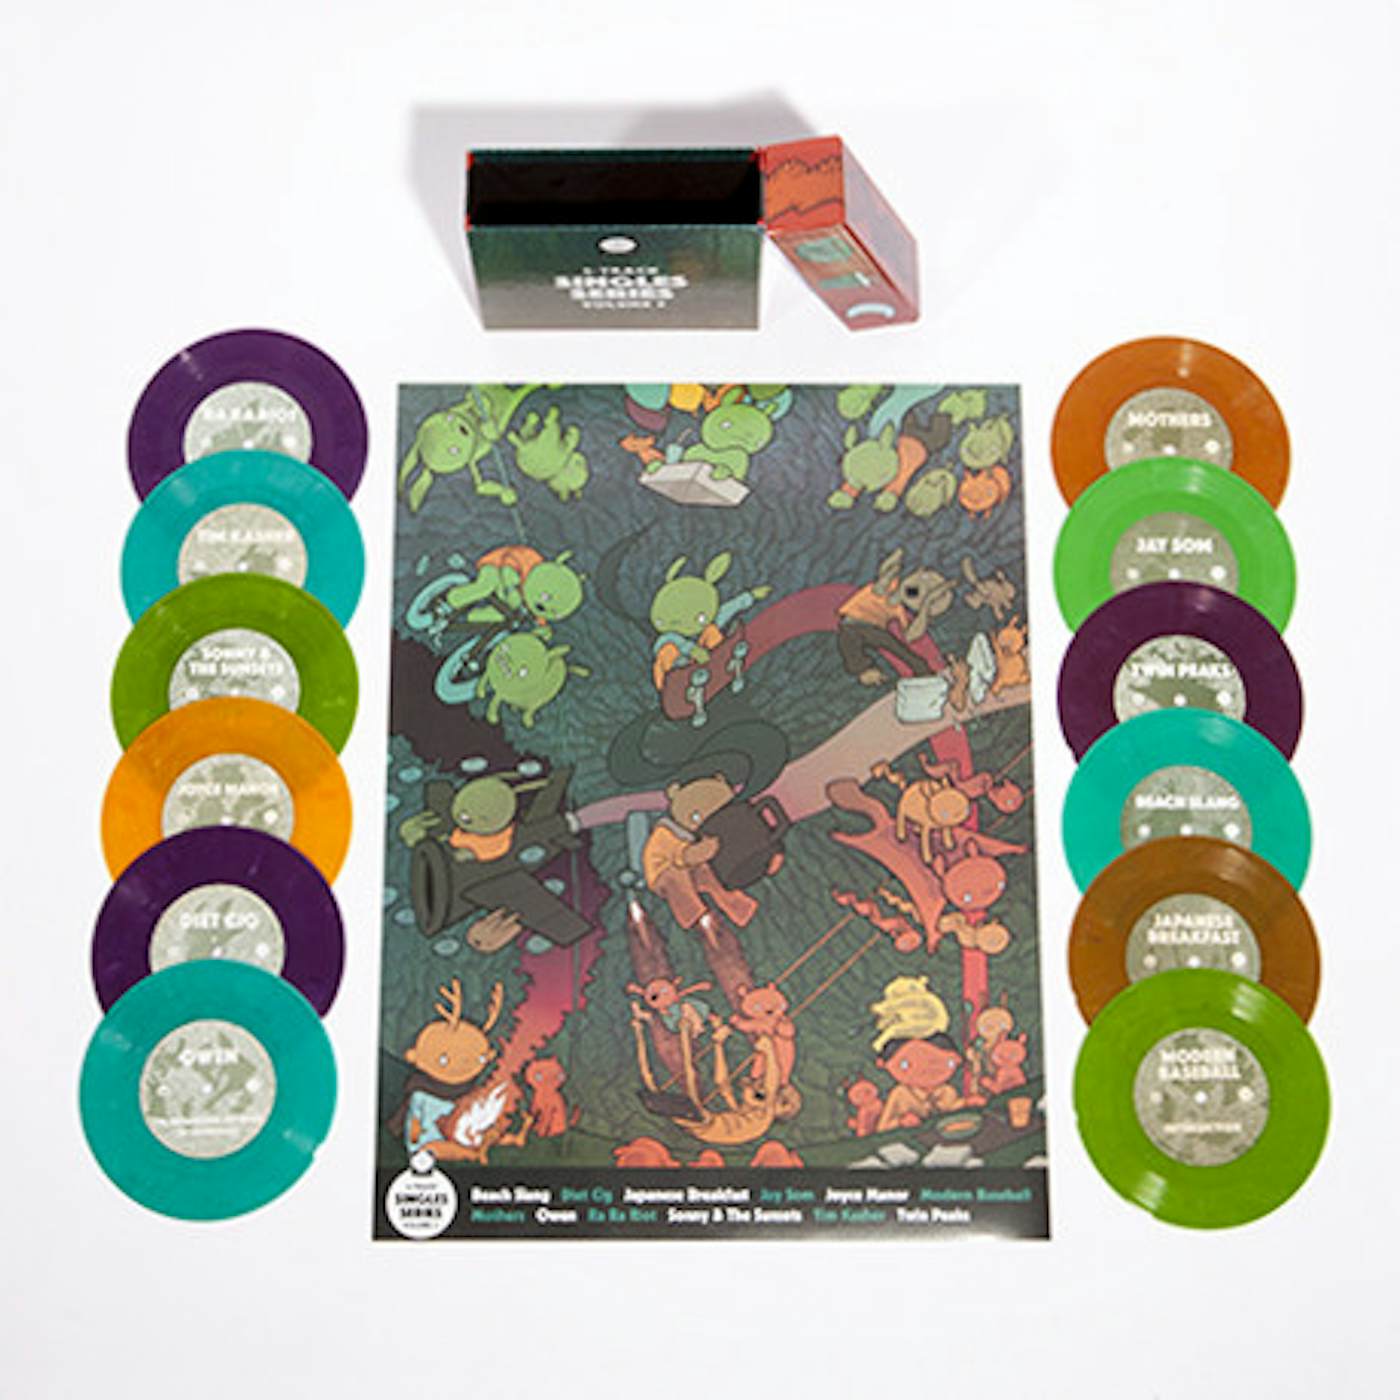 Sonny & The Sunsets Polyvinyl 4-Track Singles Series Vol. 3 COMPLETE BOX SET (Garage Sale)